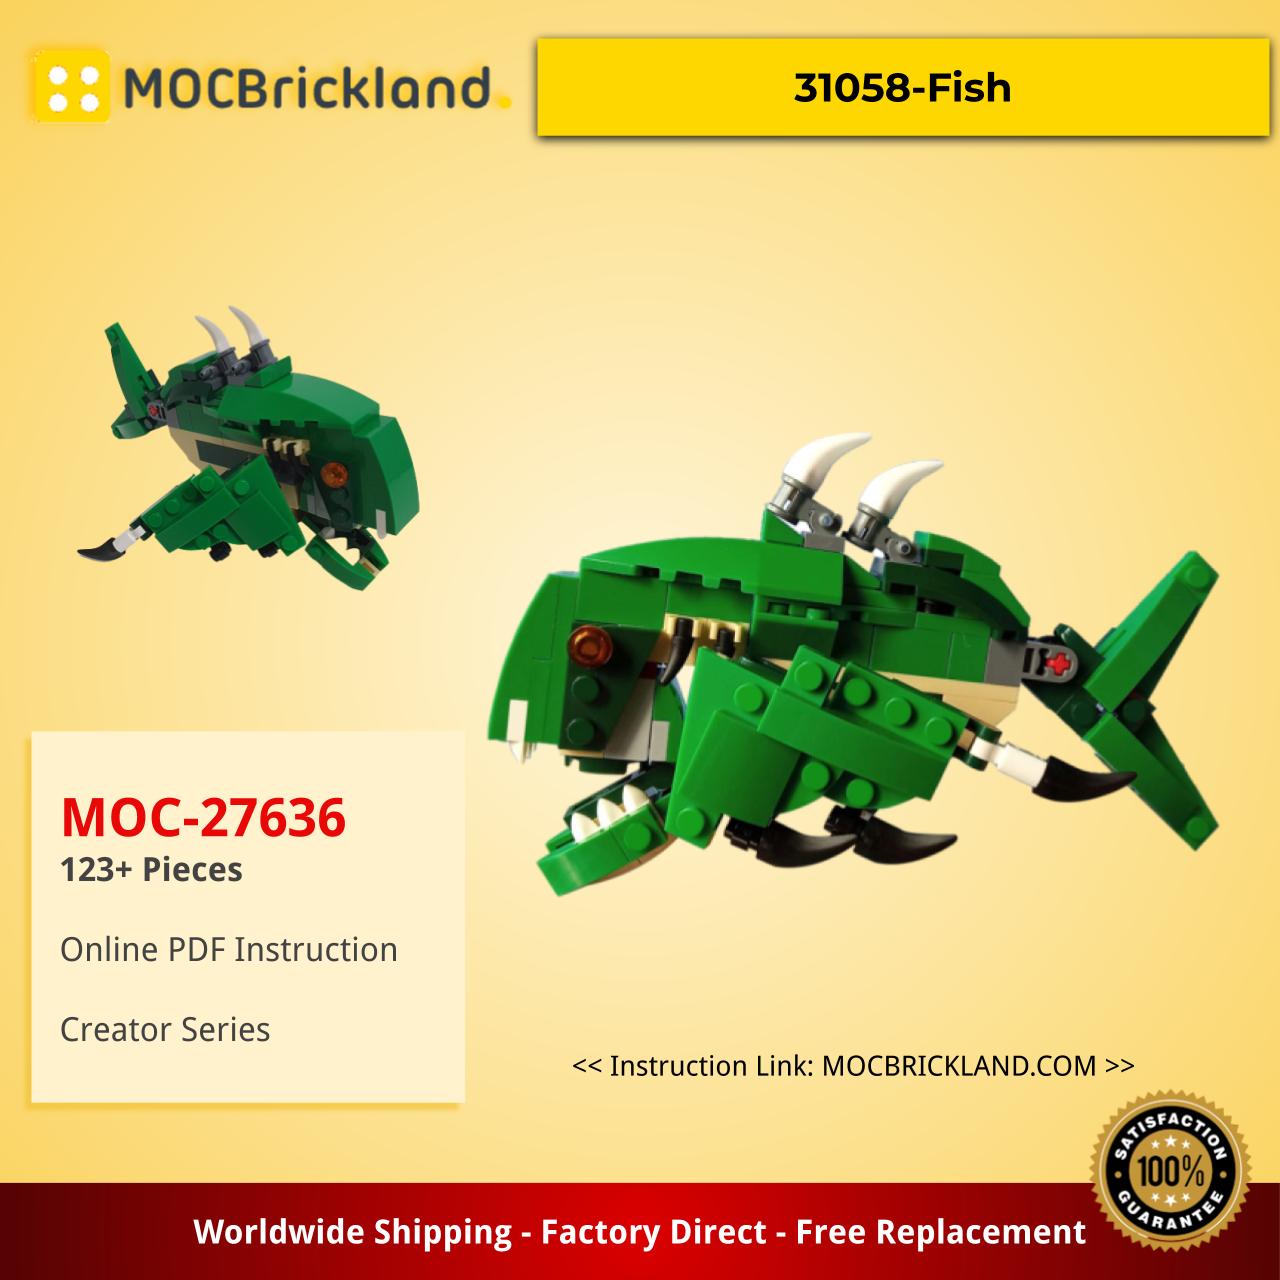 MOCBRICKLAND MOC-27636 31058-Fish